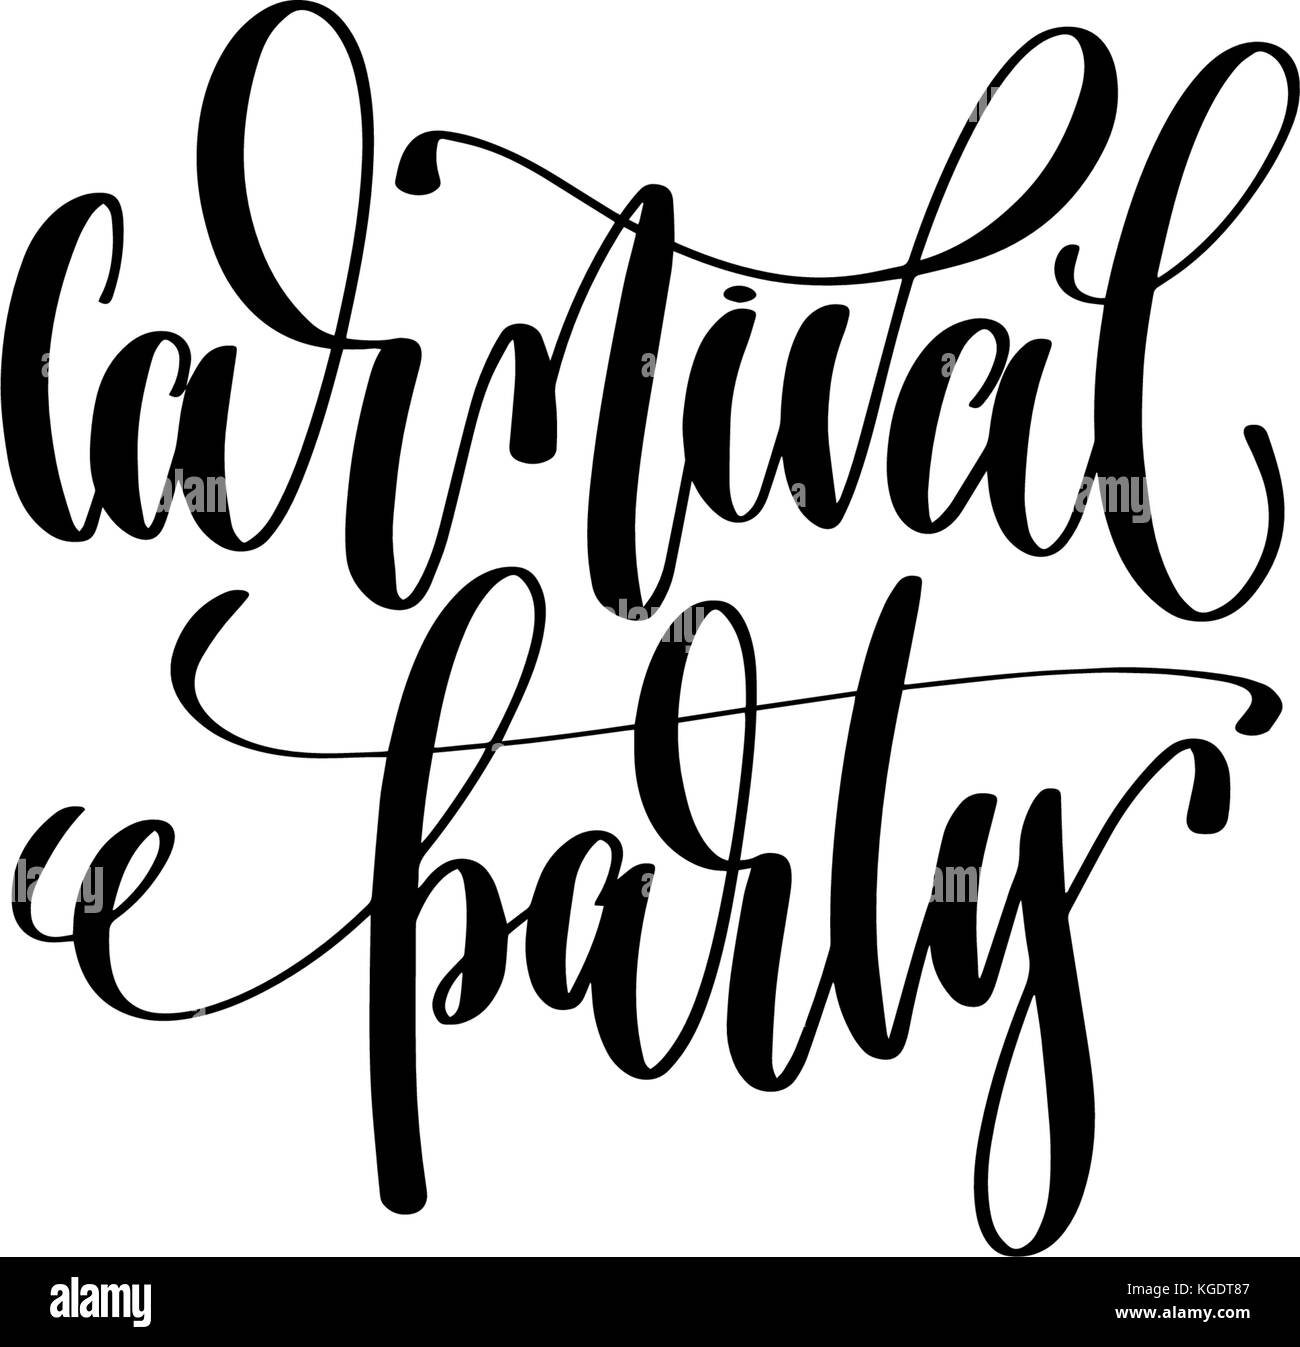 carnival party hand lettering event invitation inscription Stock Vector